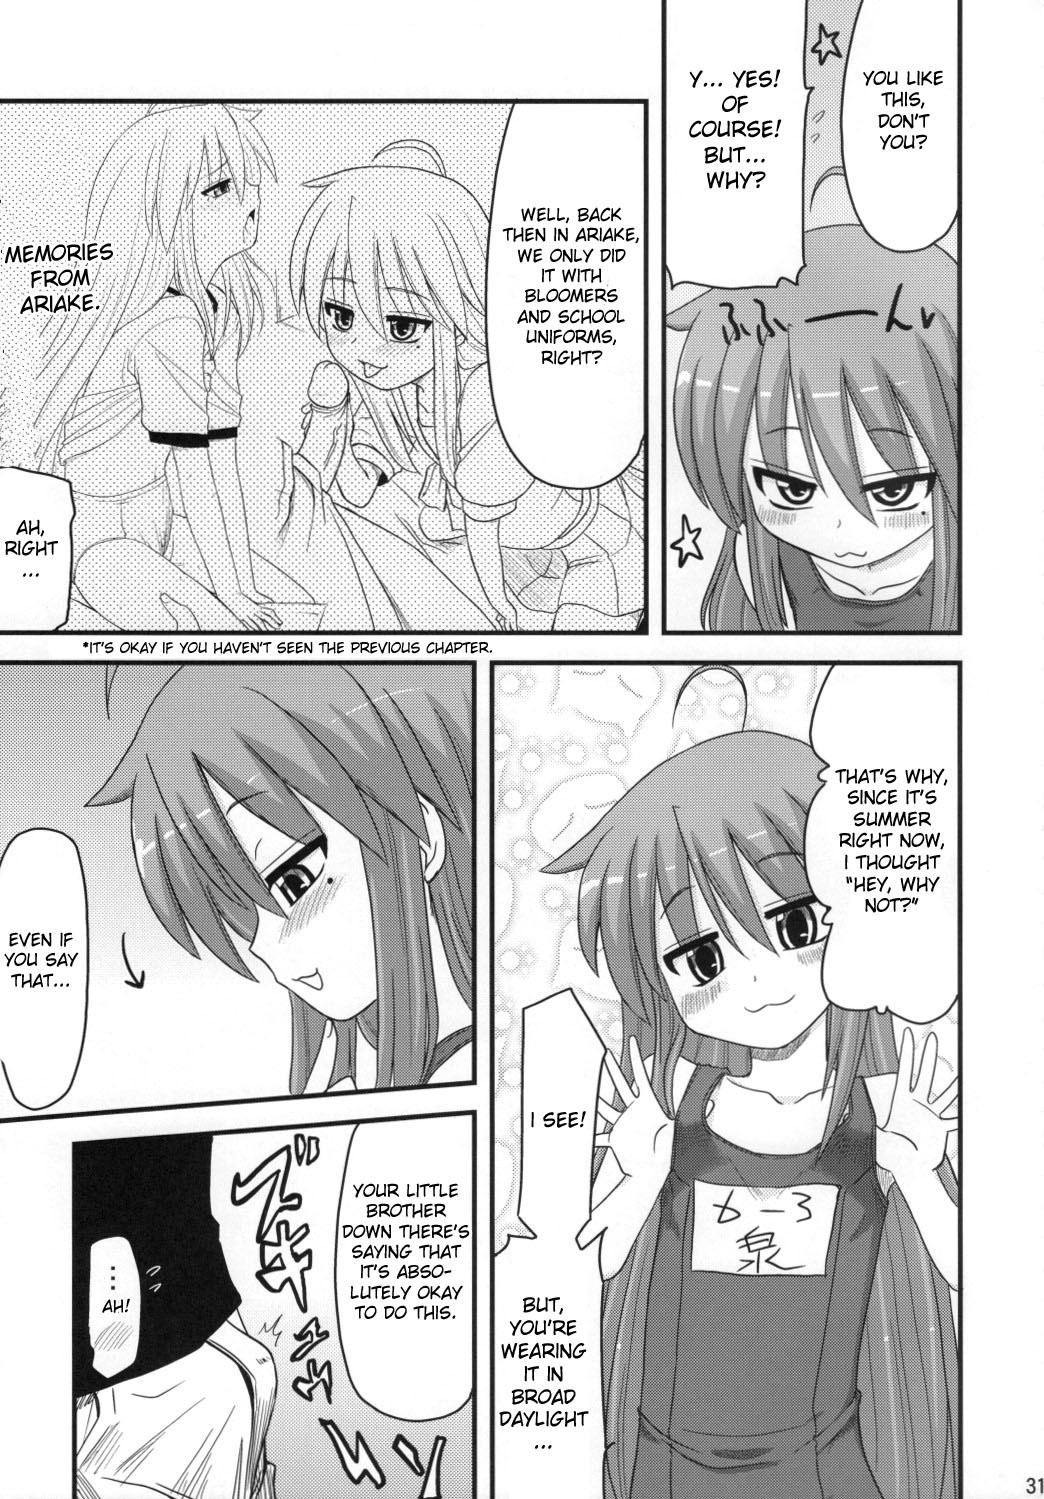 Konata and Oh-zu 4 people each and every one + 1 hentai manga picture 27